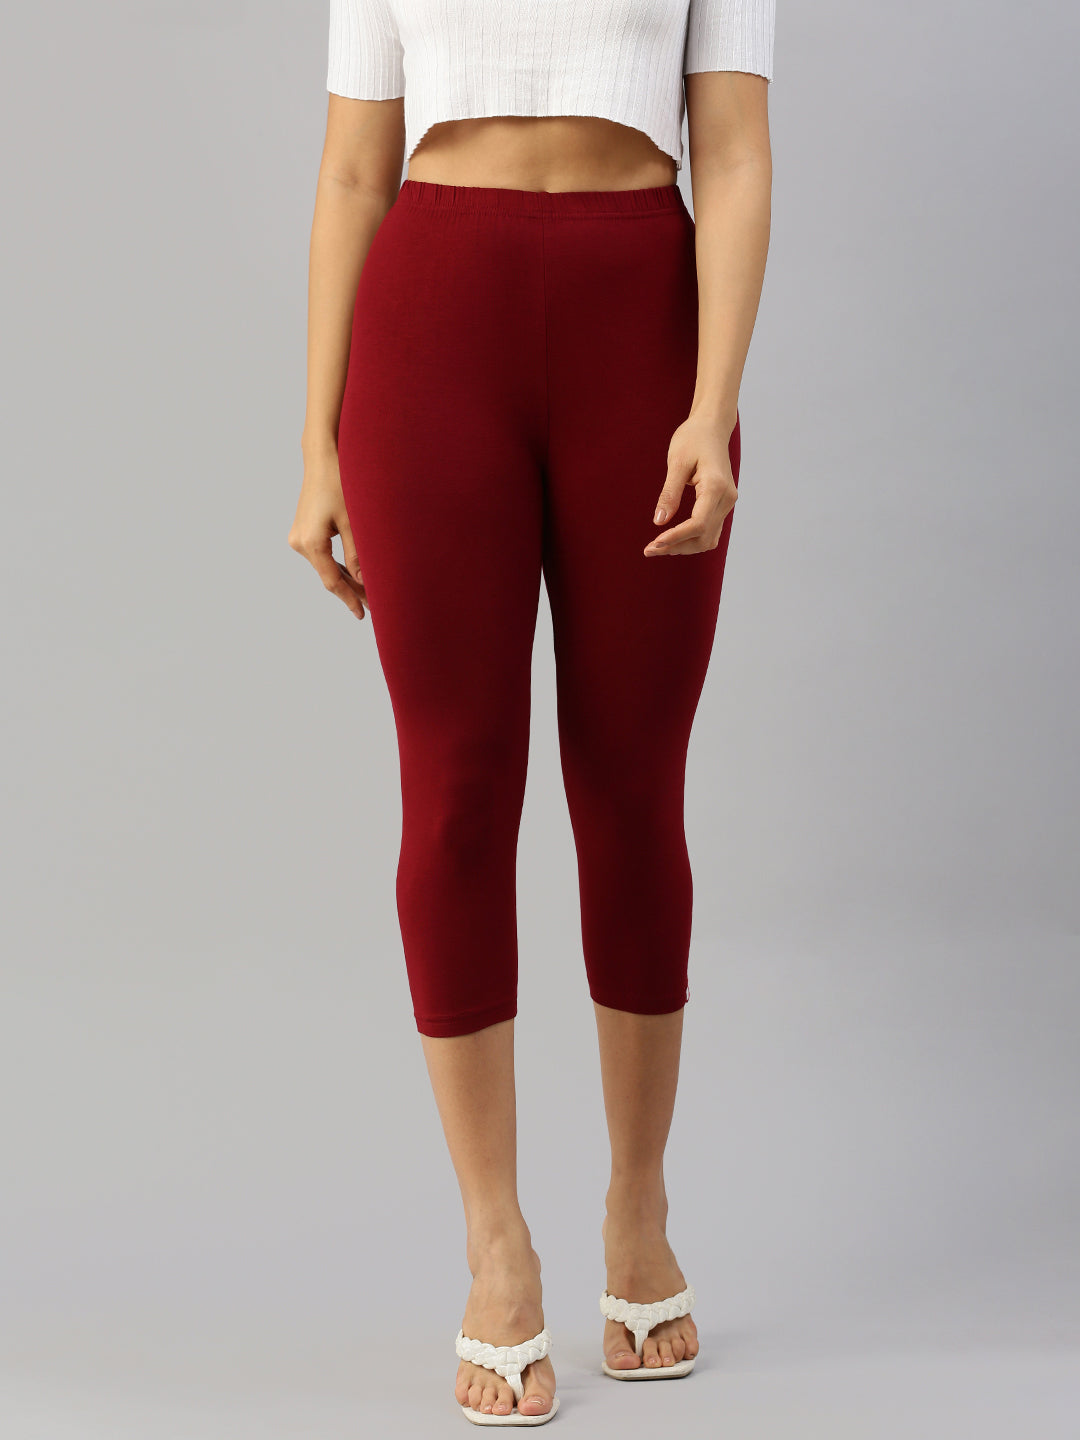 Prisma- Womens Cotton-Viscose Churidar Leggings - Red